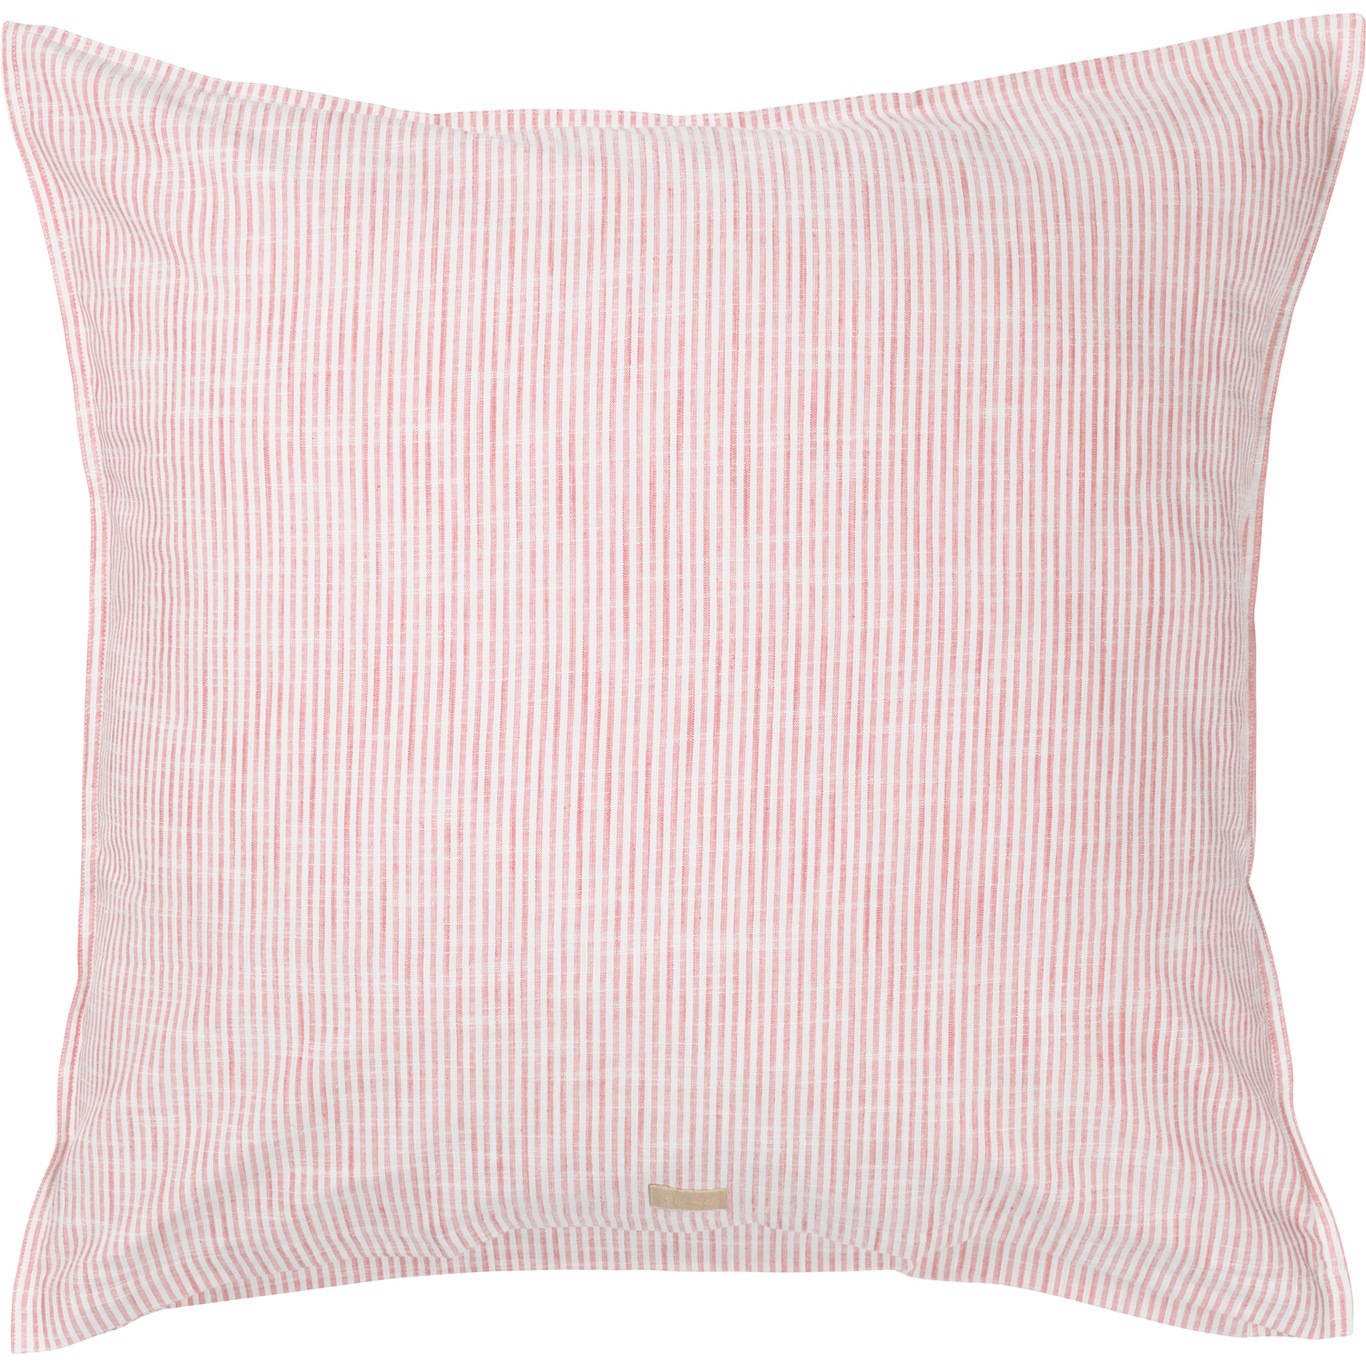 Monochrome Lines Pillowcase 50x60 cm, Pink